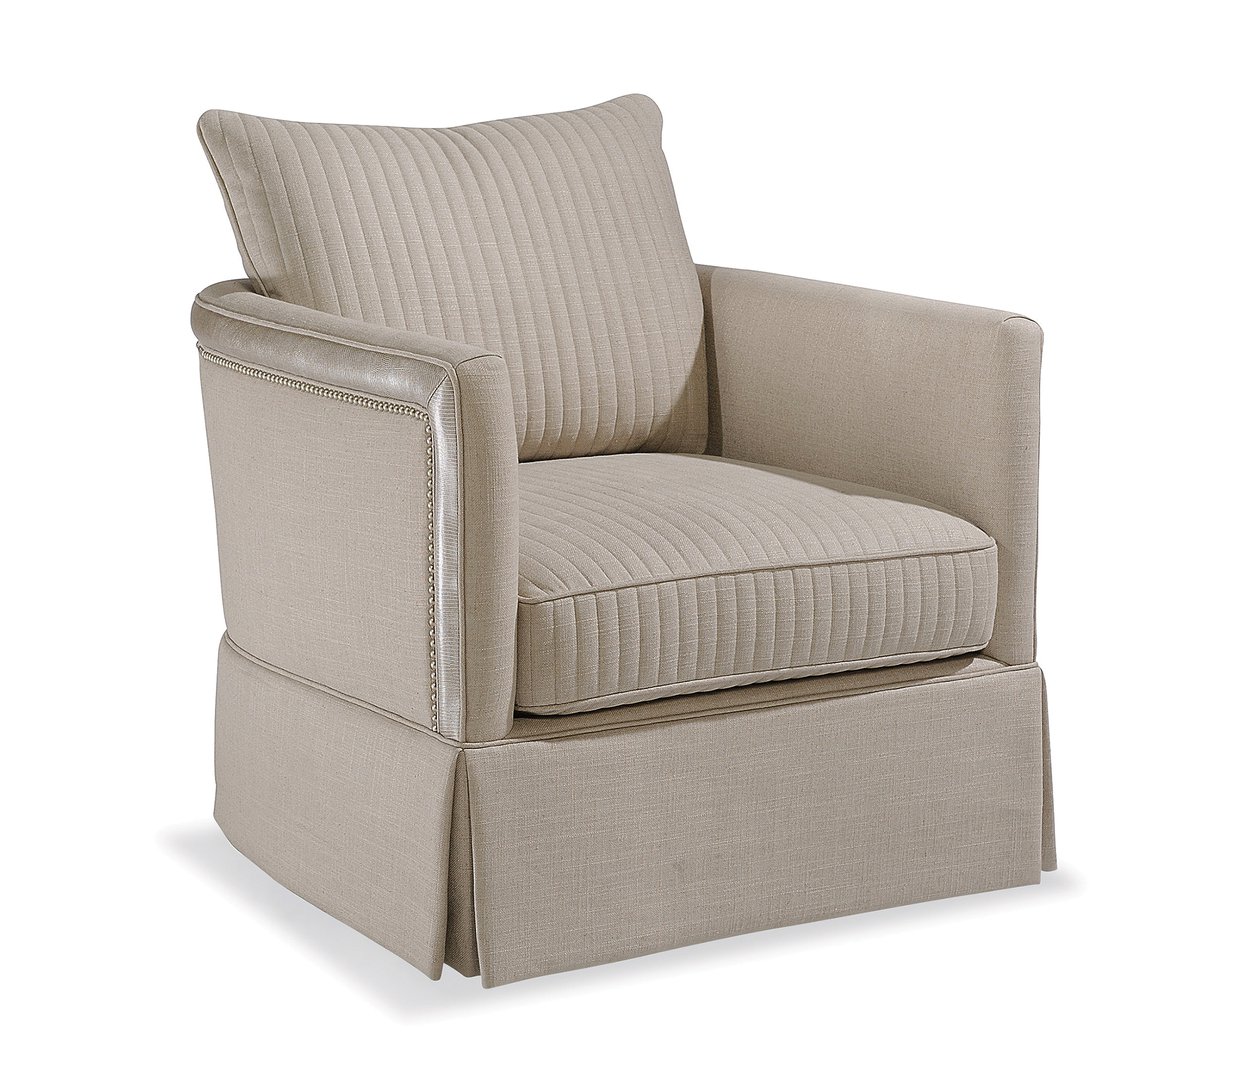 Laucala swivel chair Image